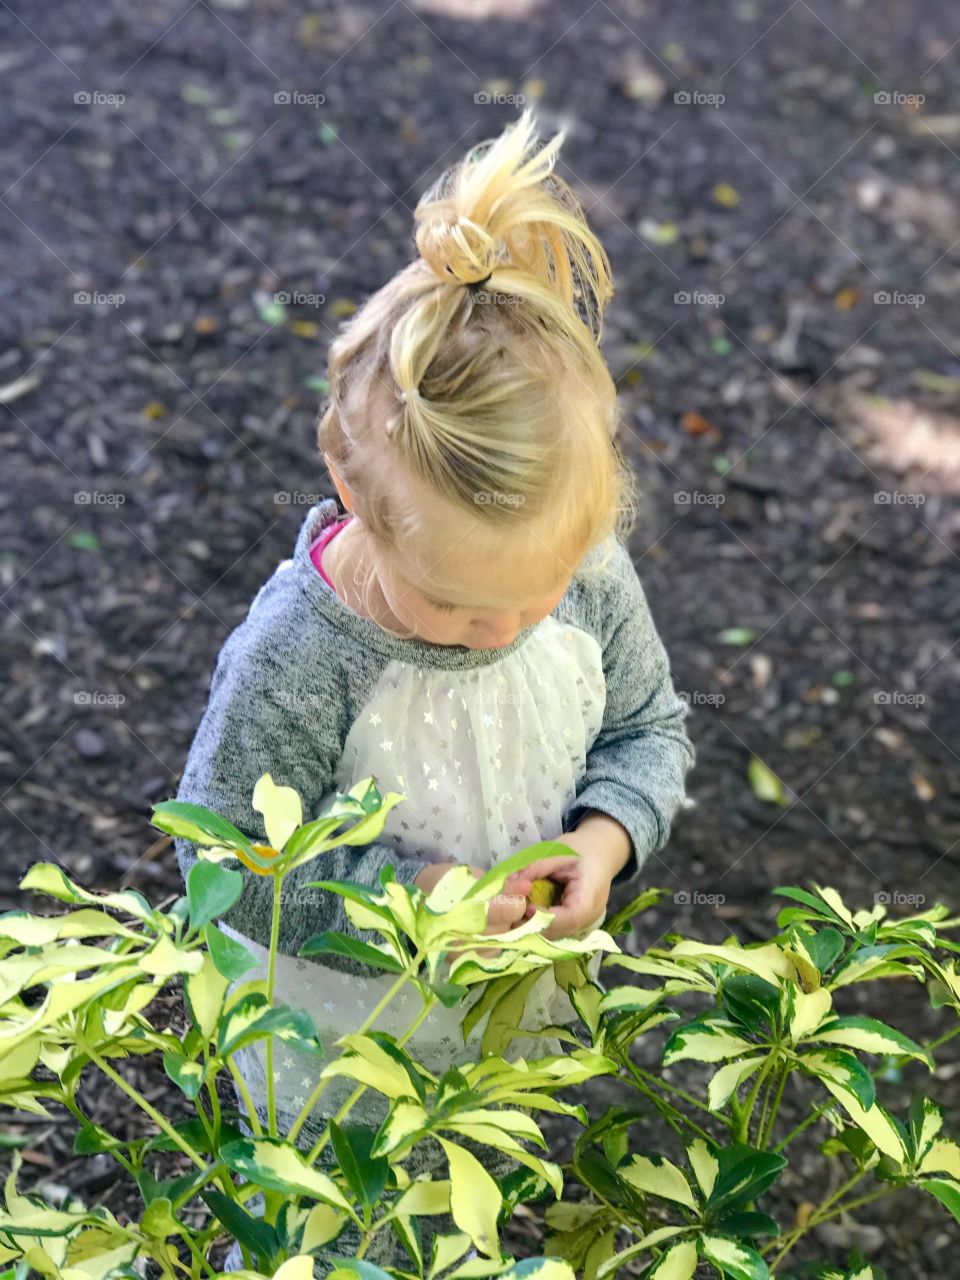 Leaf picking baby girl